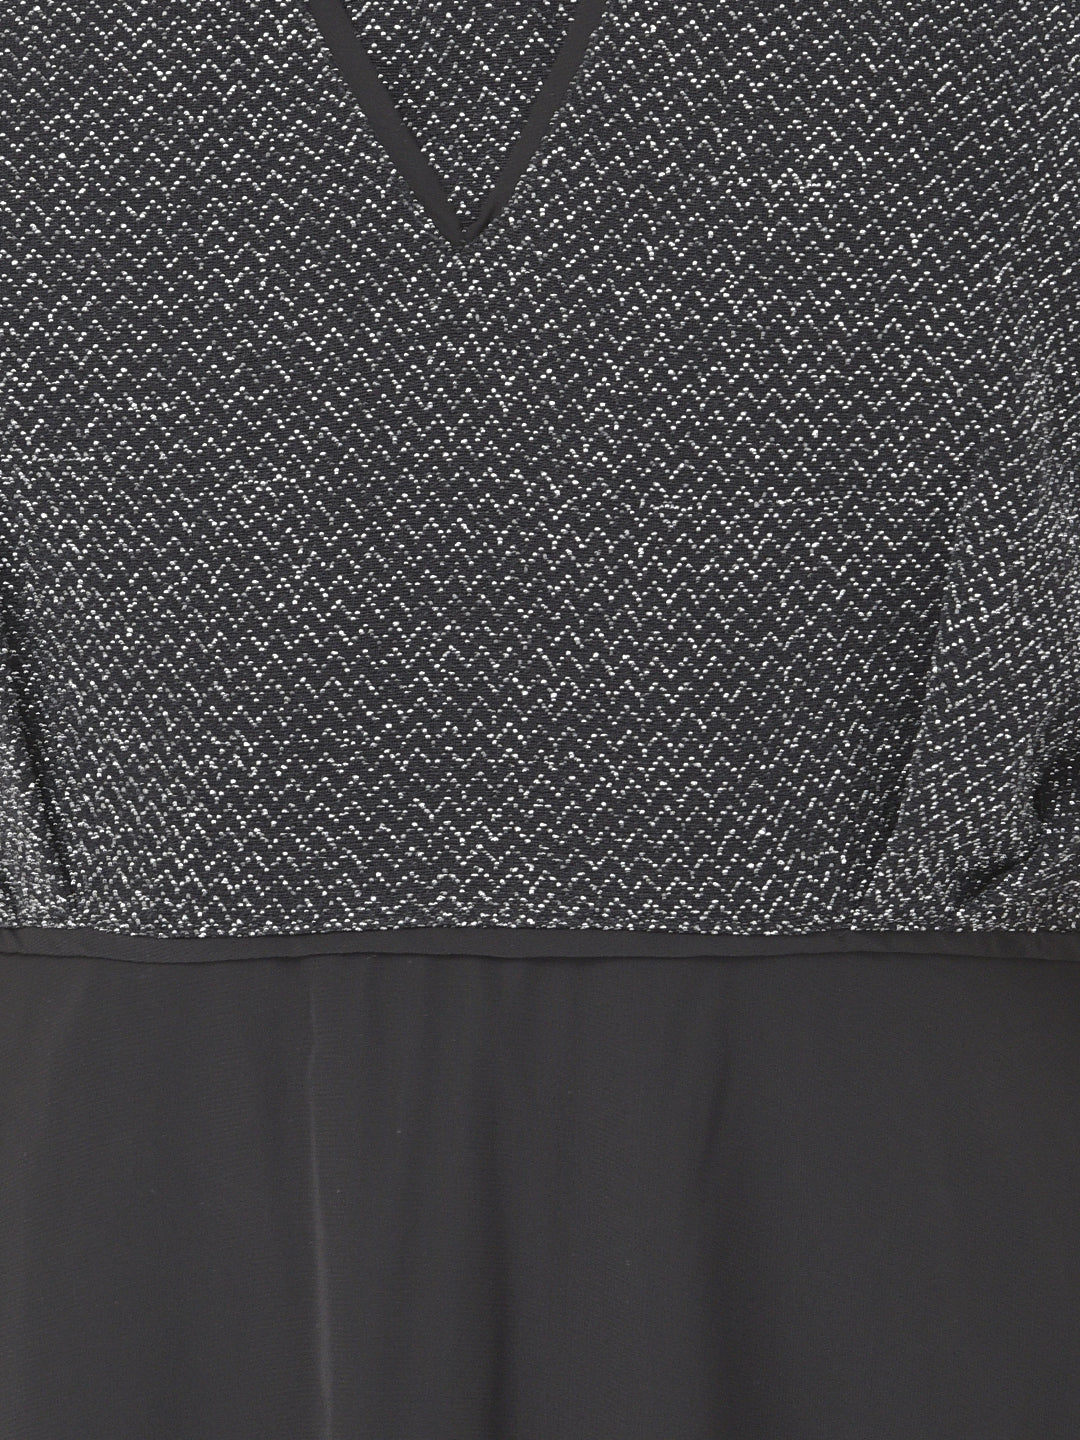 Black Half Sleeve Solid Maxi Dress